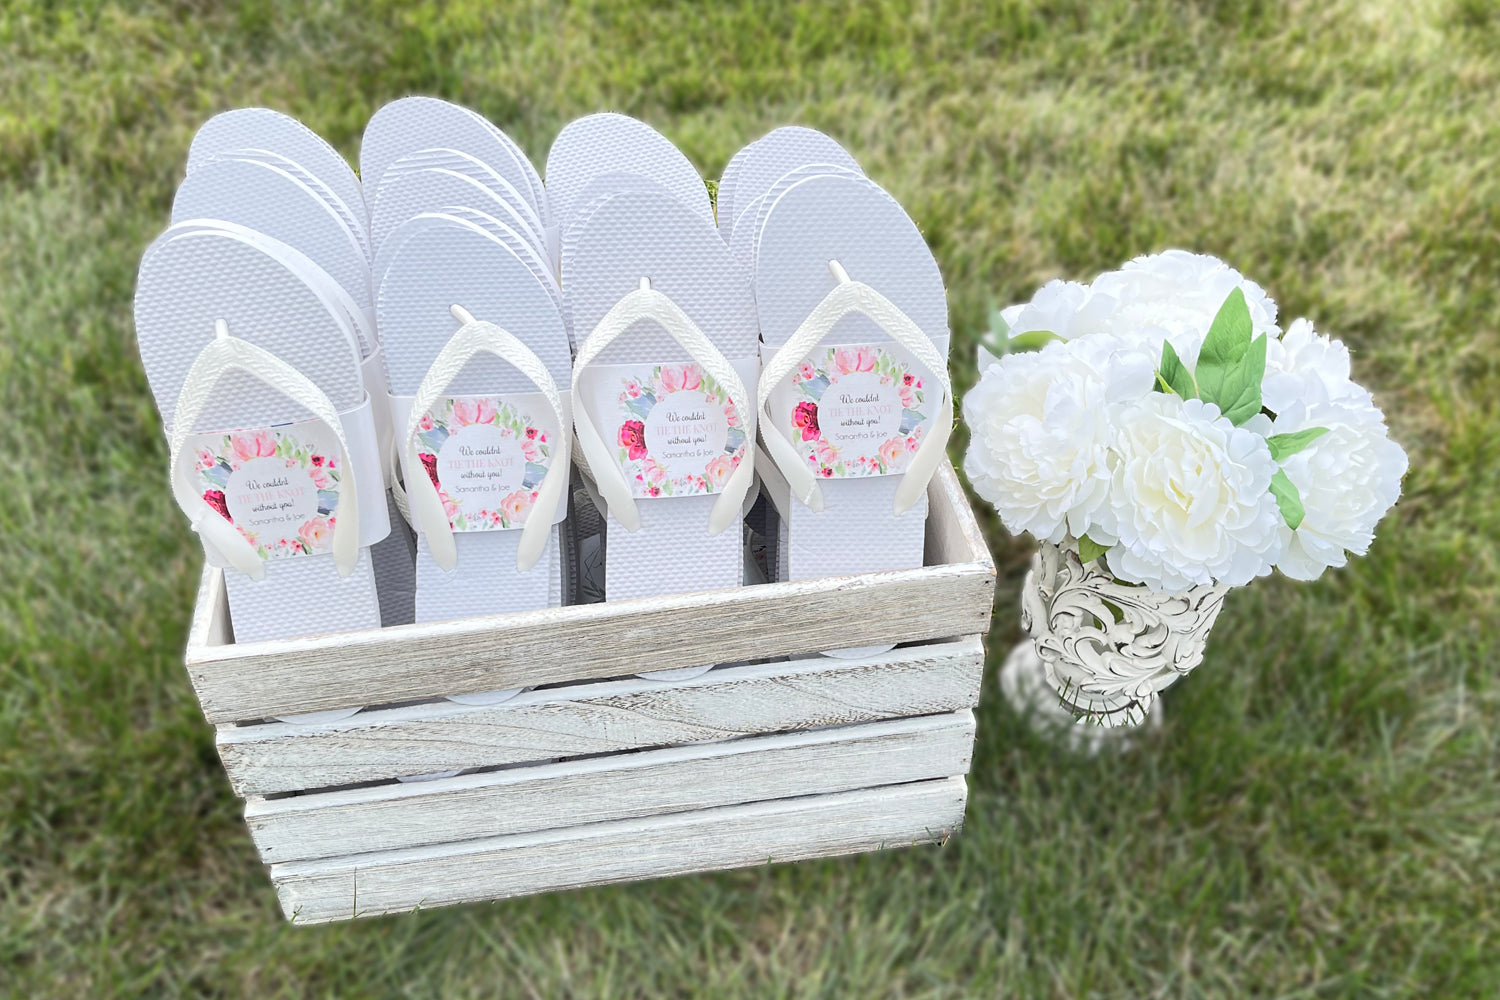 A Bride On A Budget: Wedding DIY: Flip Flop Basket